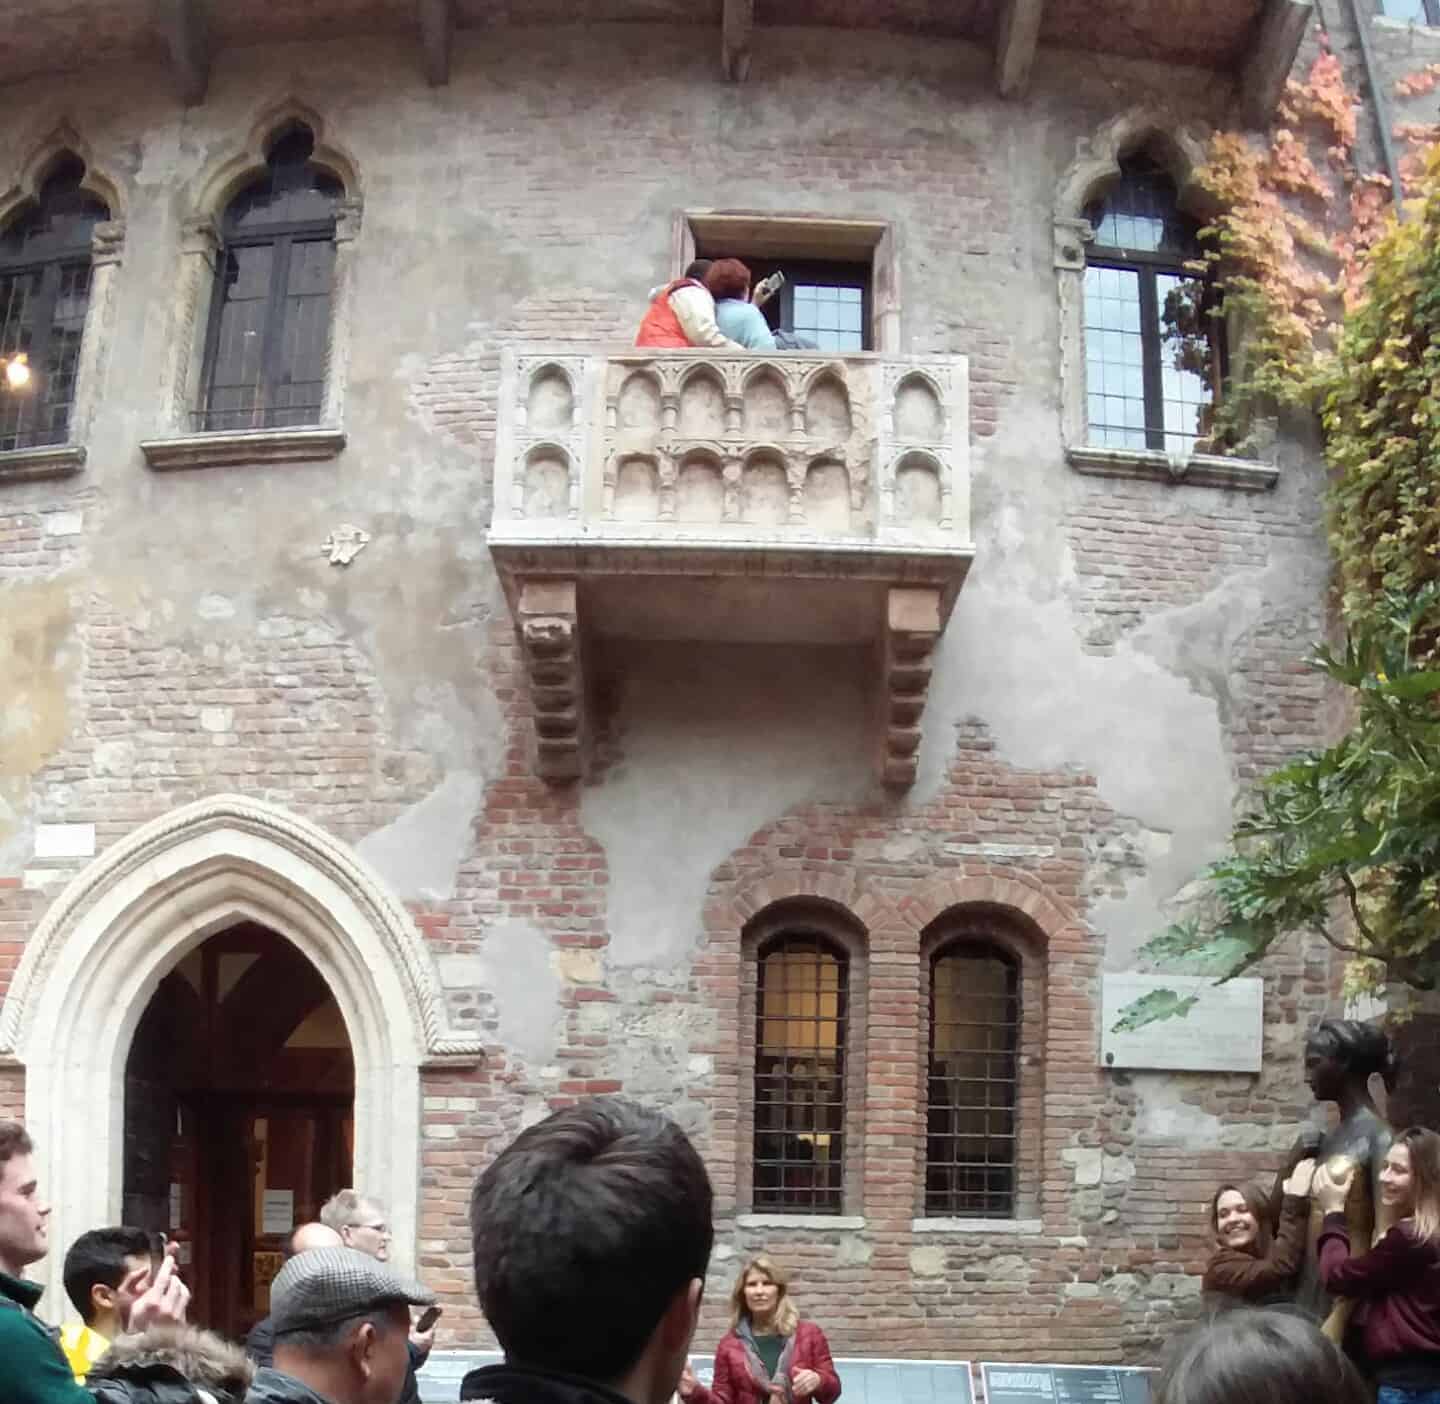 Tourists gazing up at Juliets balcony Verona